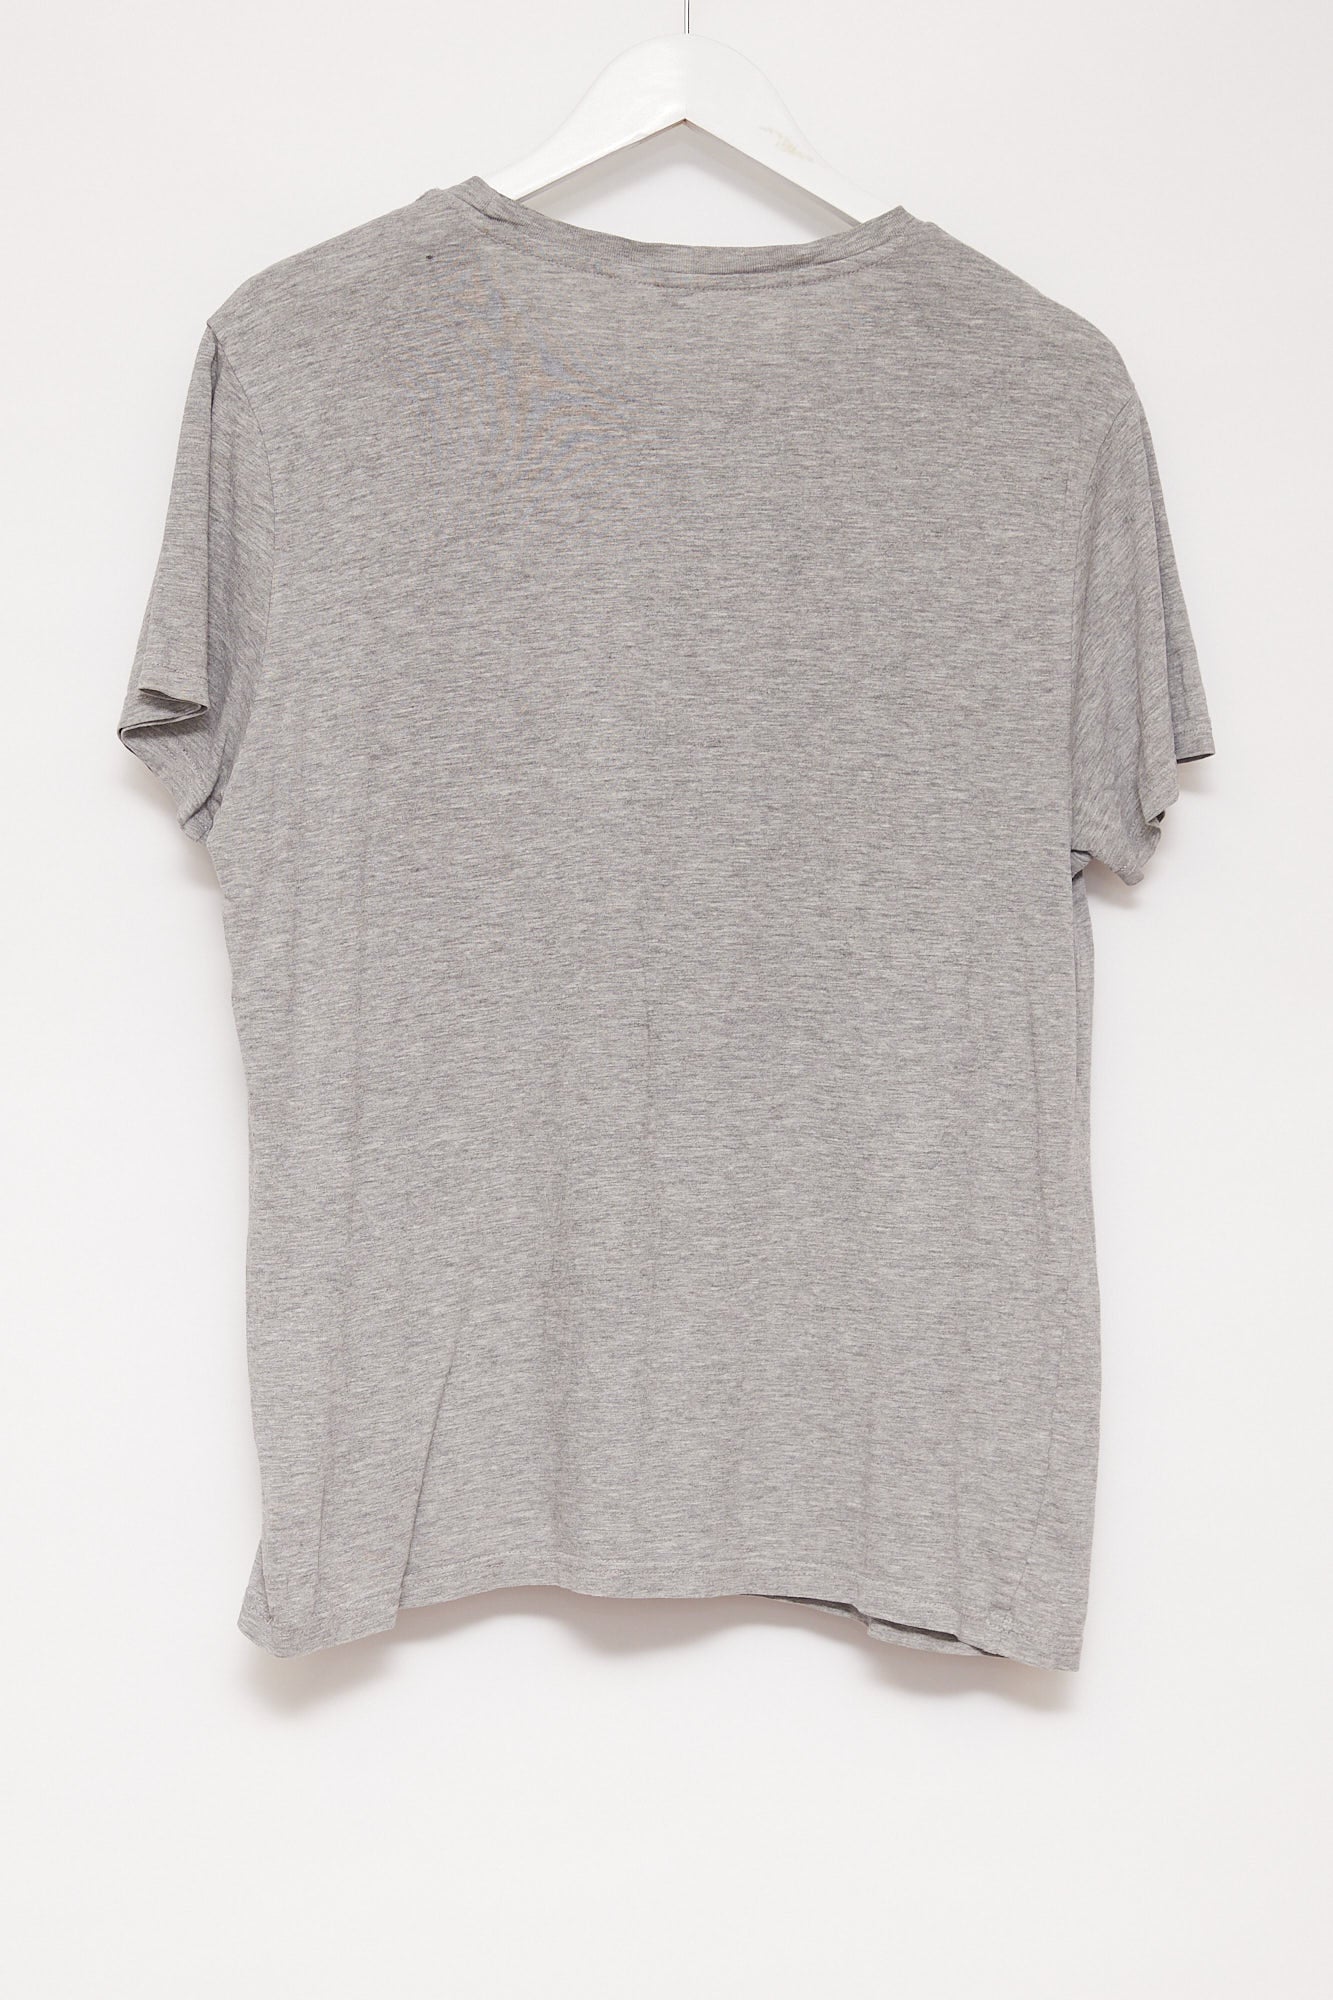 Mens H&M Grey T-shirt size Medium